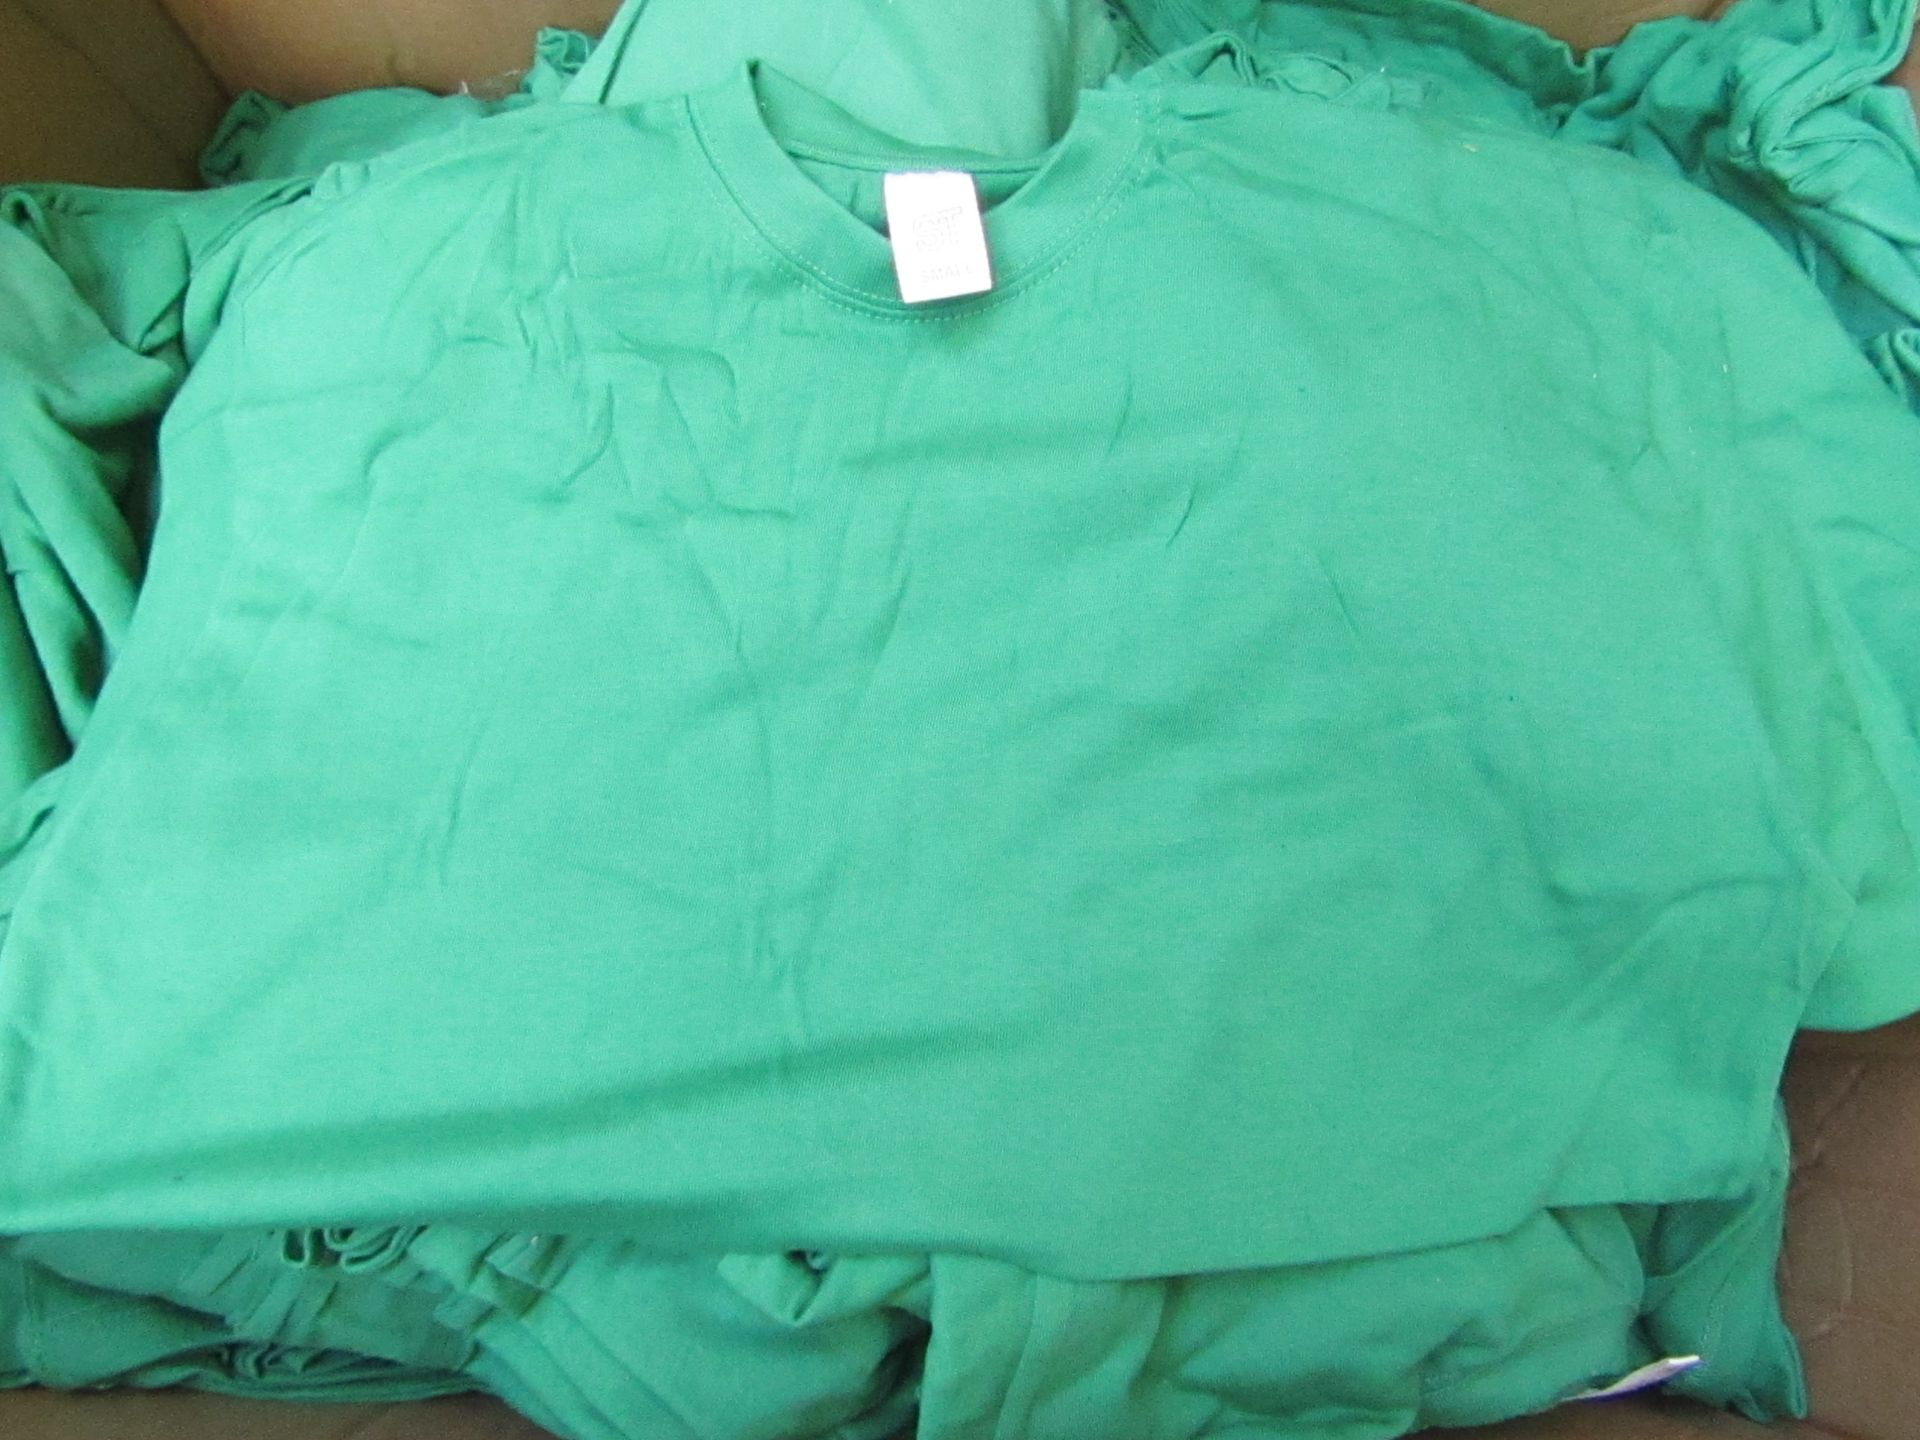 5x ST - Green T-Shirts - Size Small - Unused.